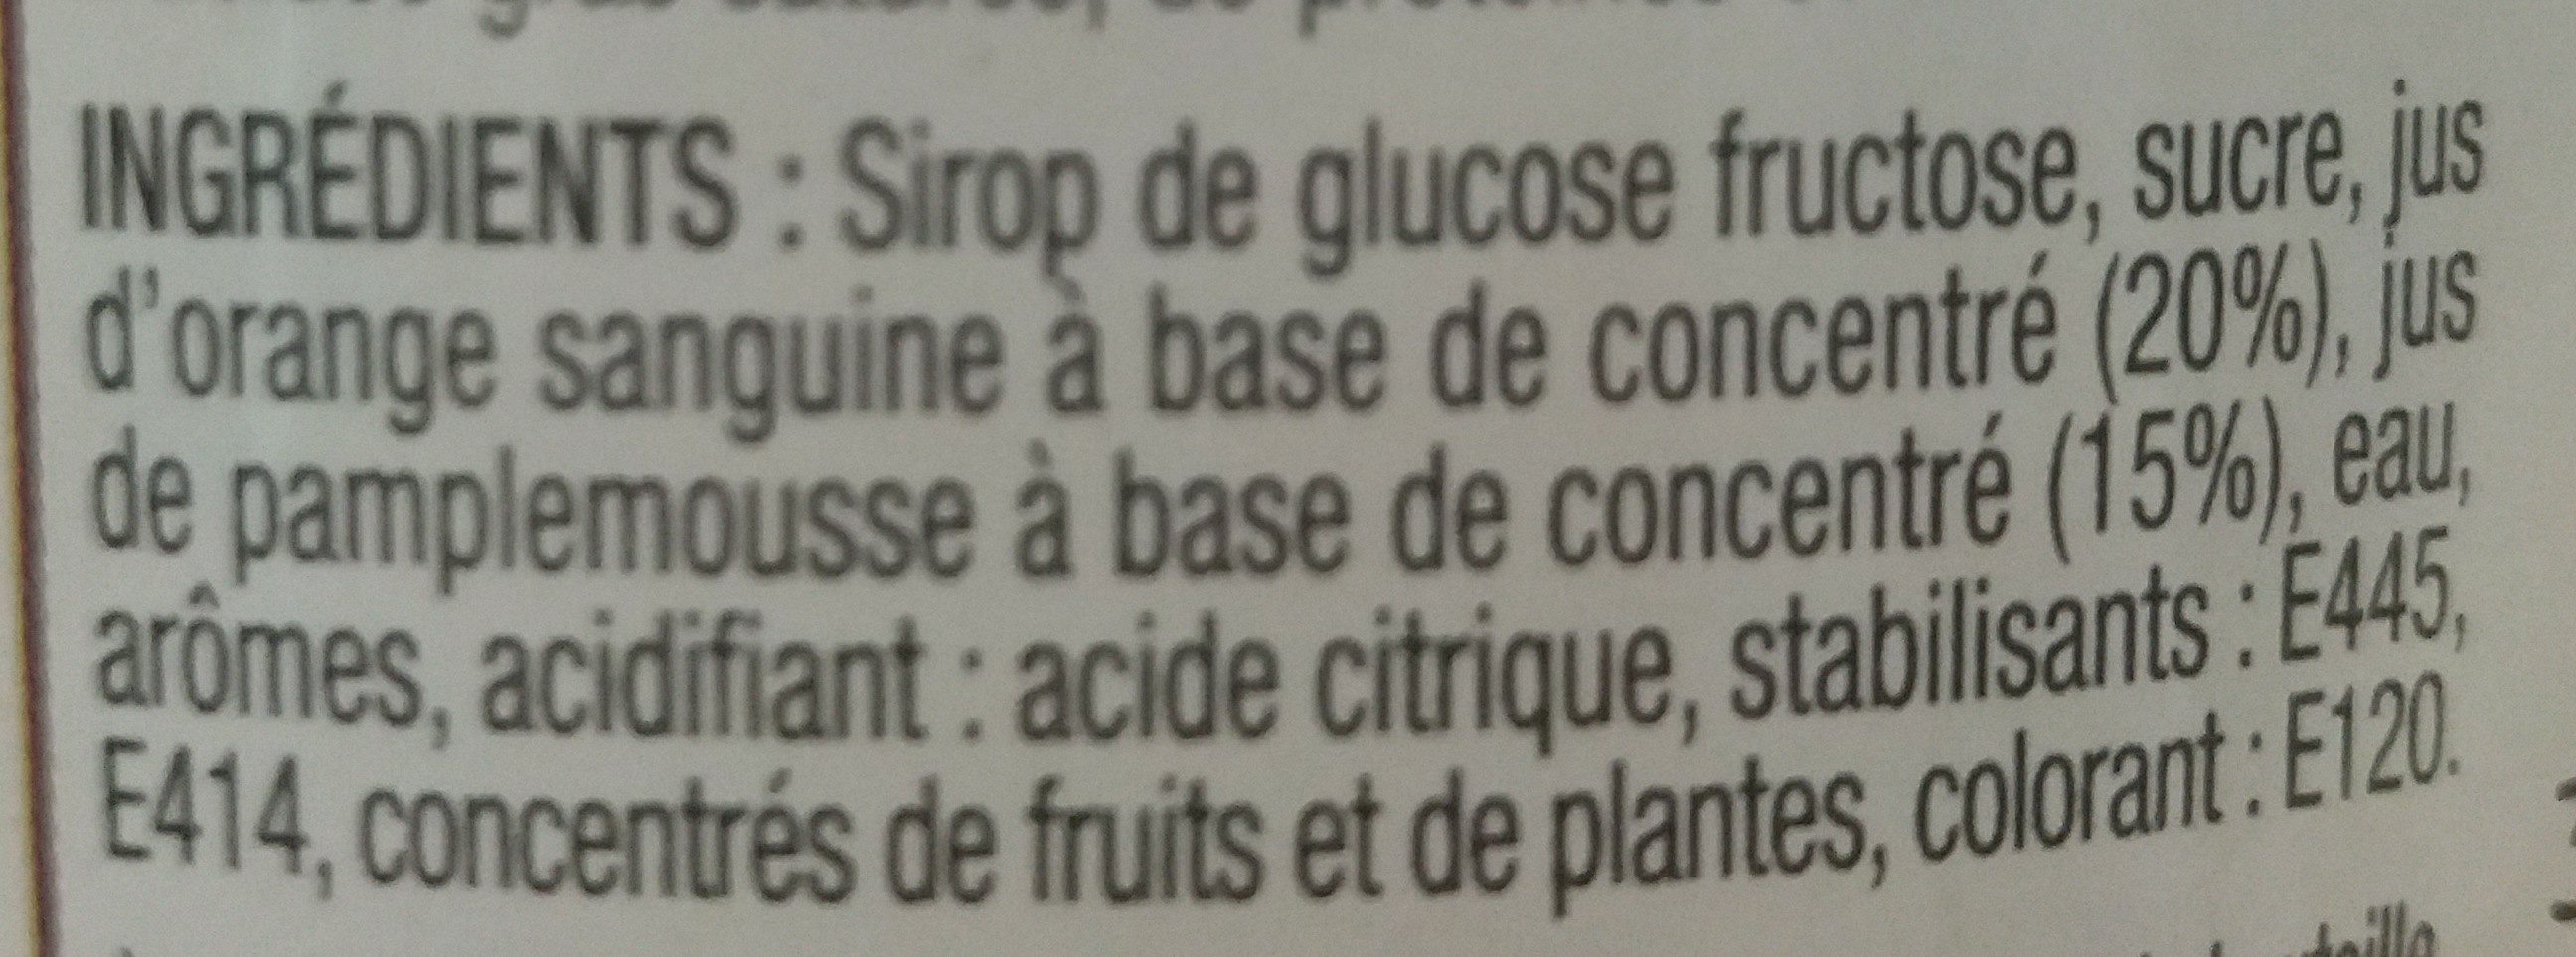 Sirop de pamplemousse orange sanguine - Ingredients - fr